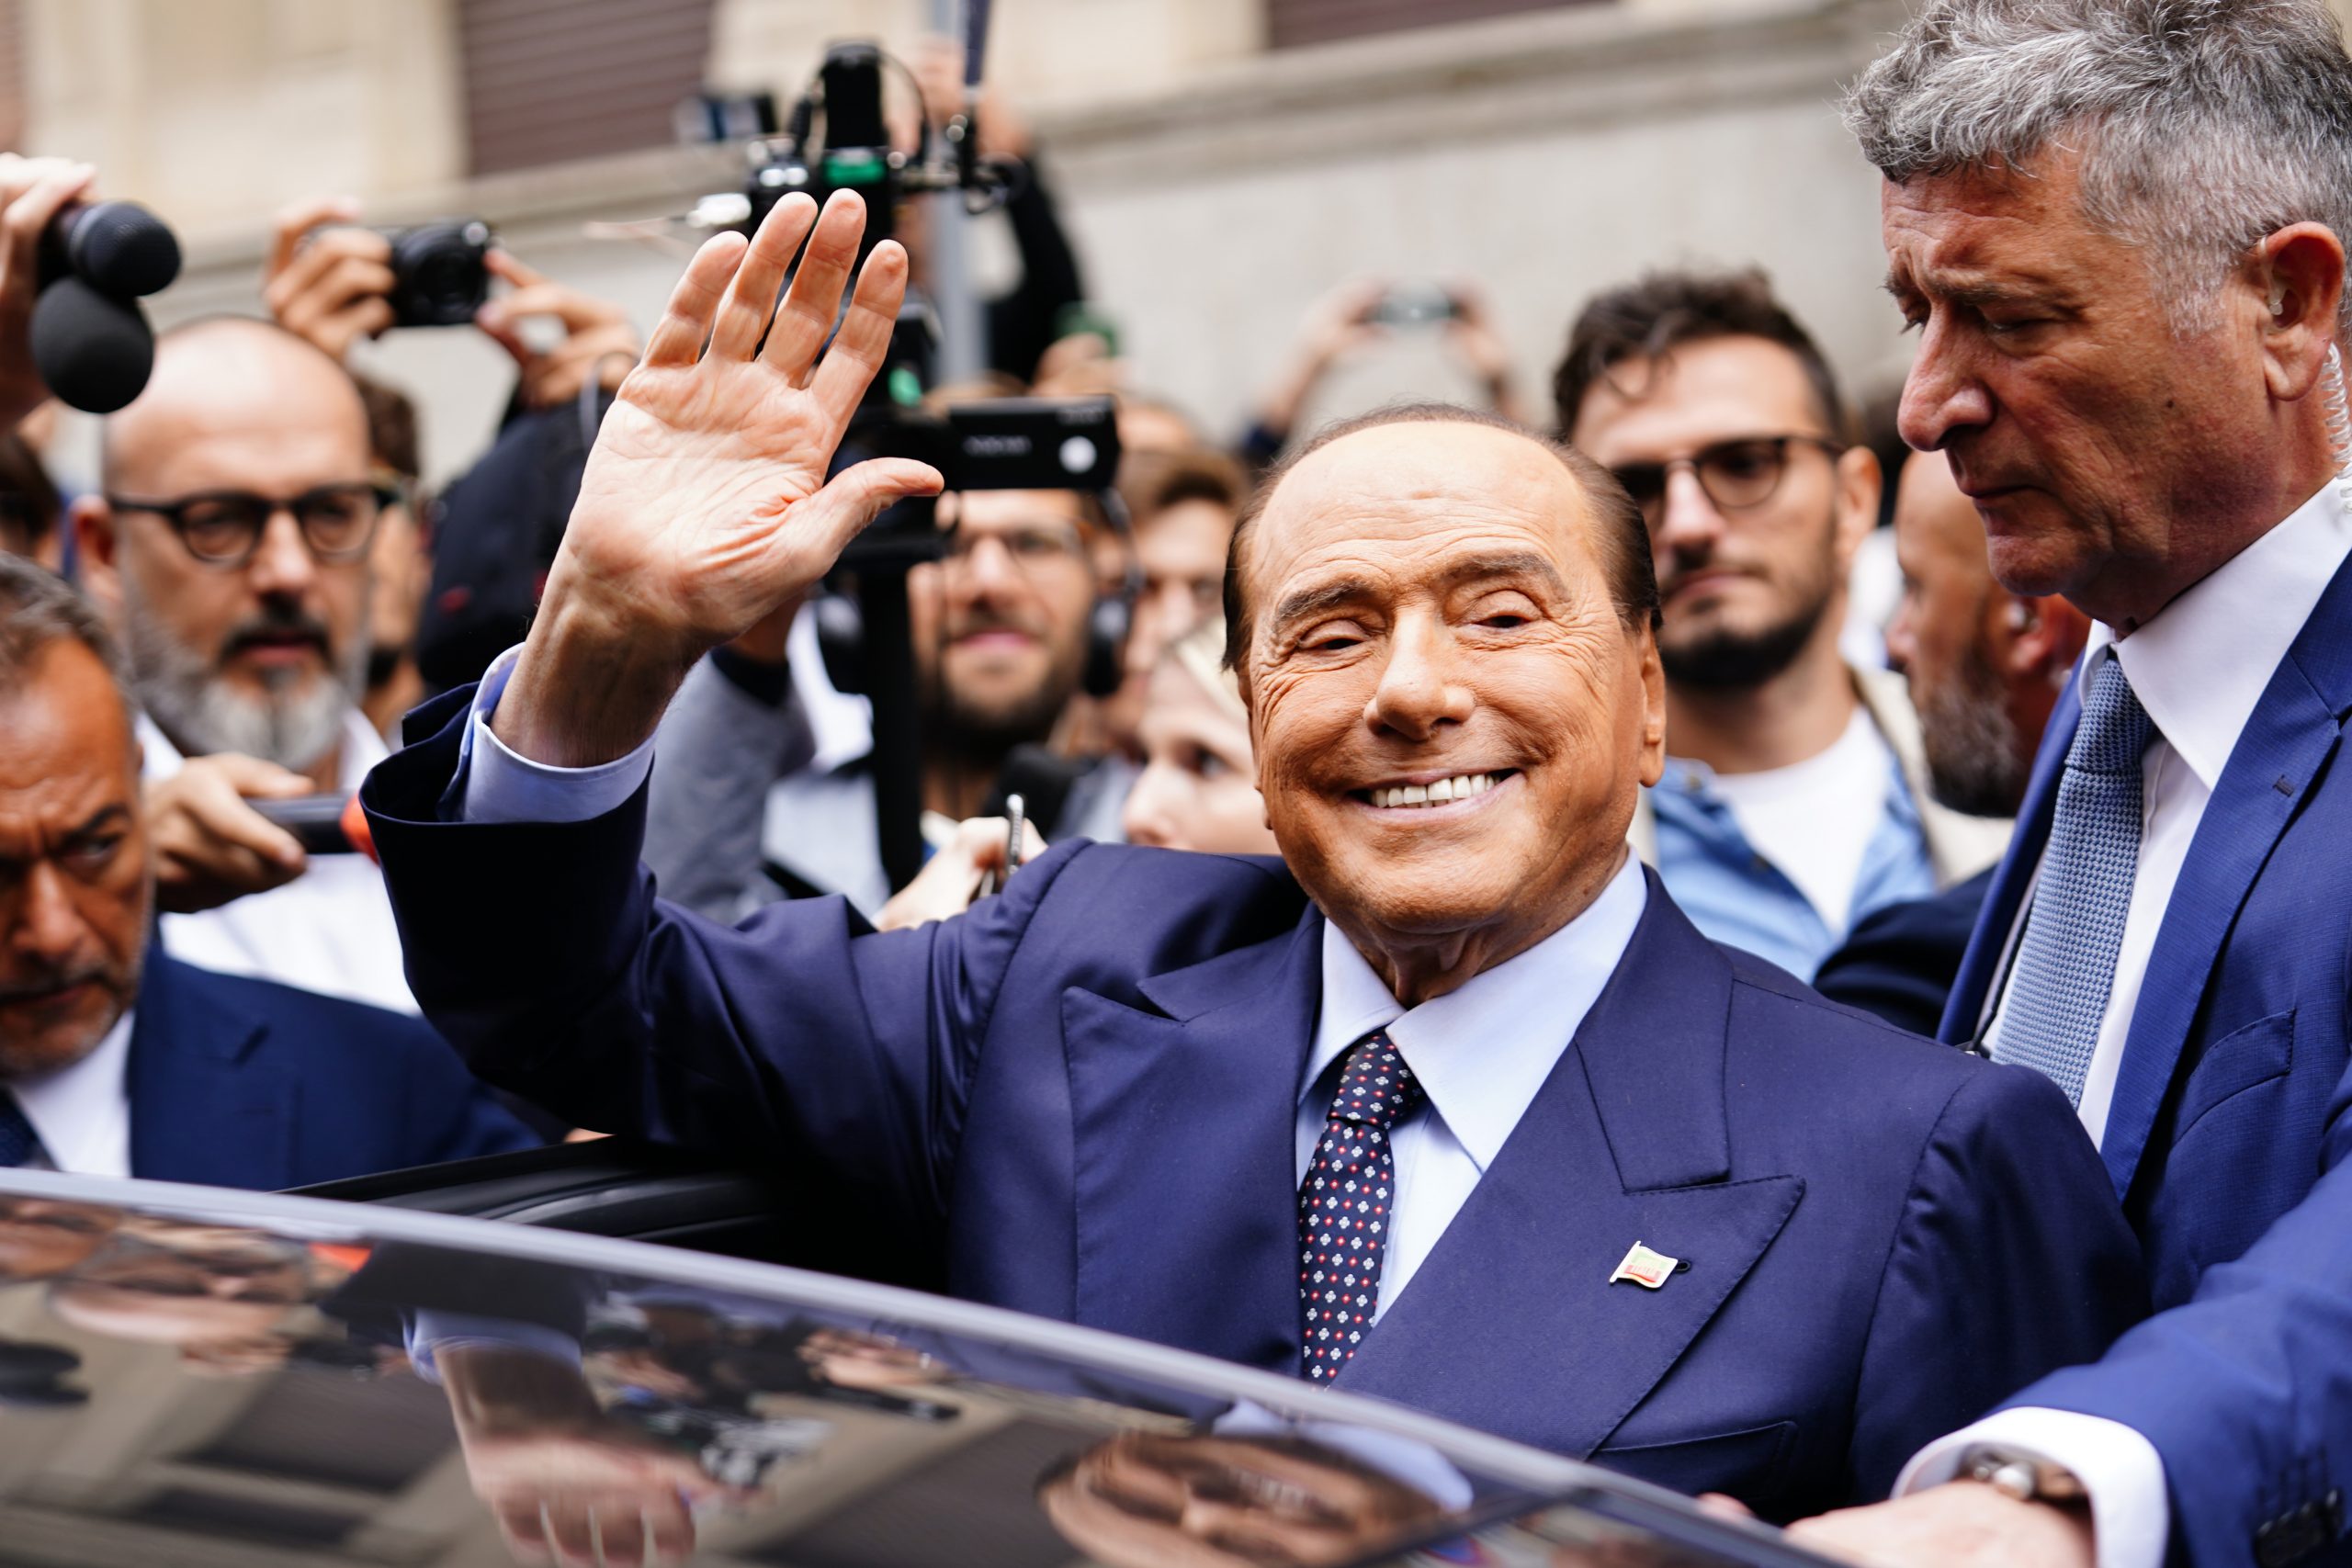 Italian Conversations – Art in the age of Berlusconi